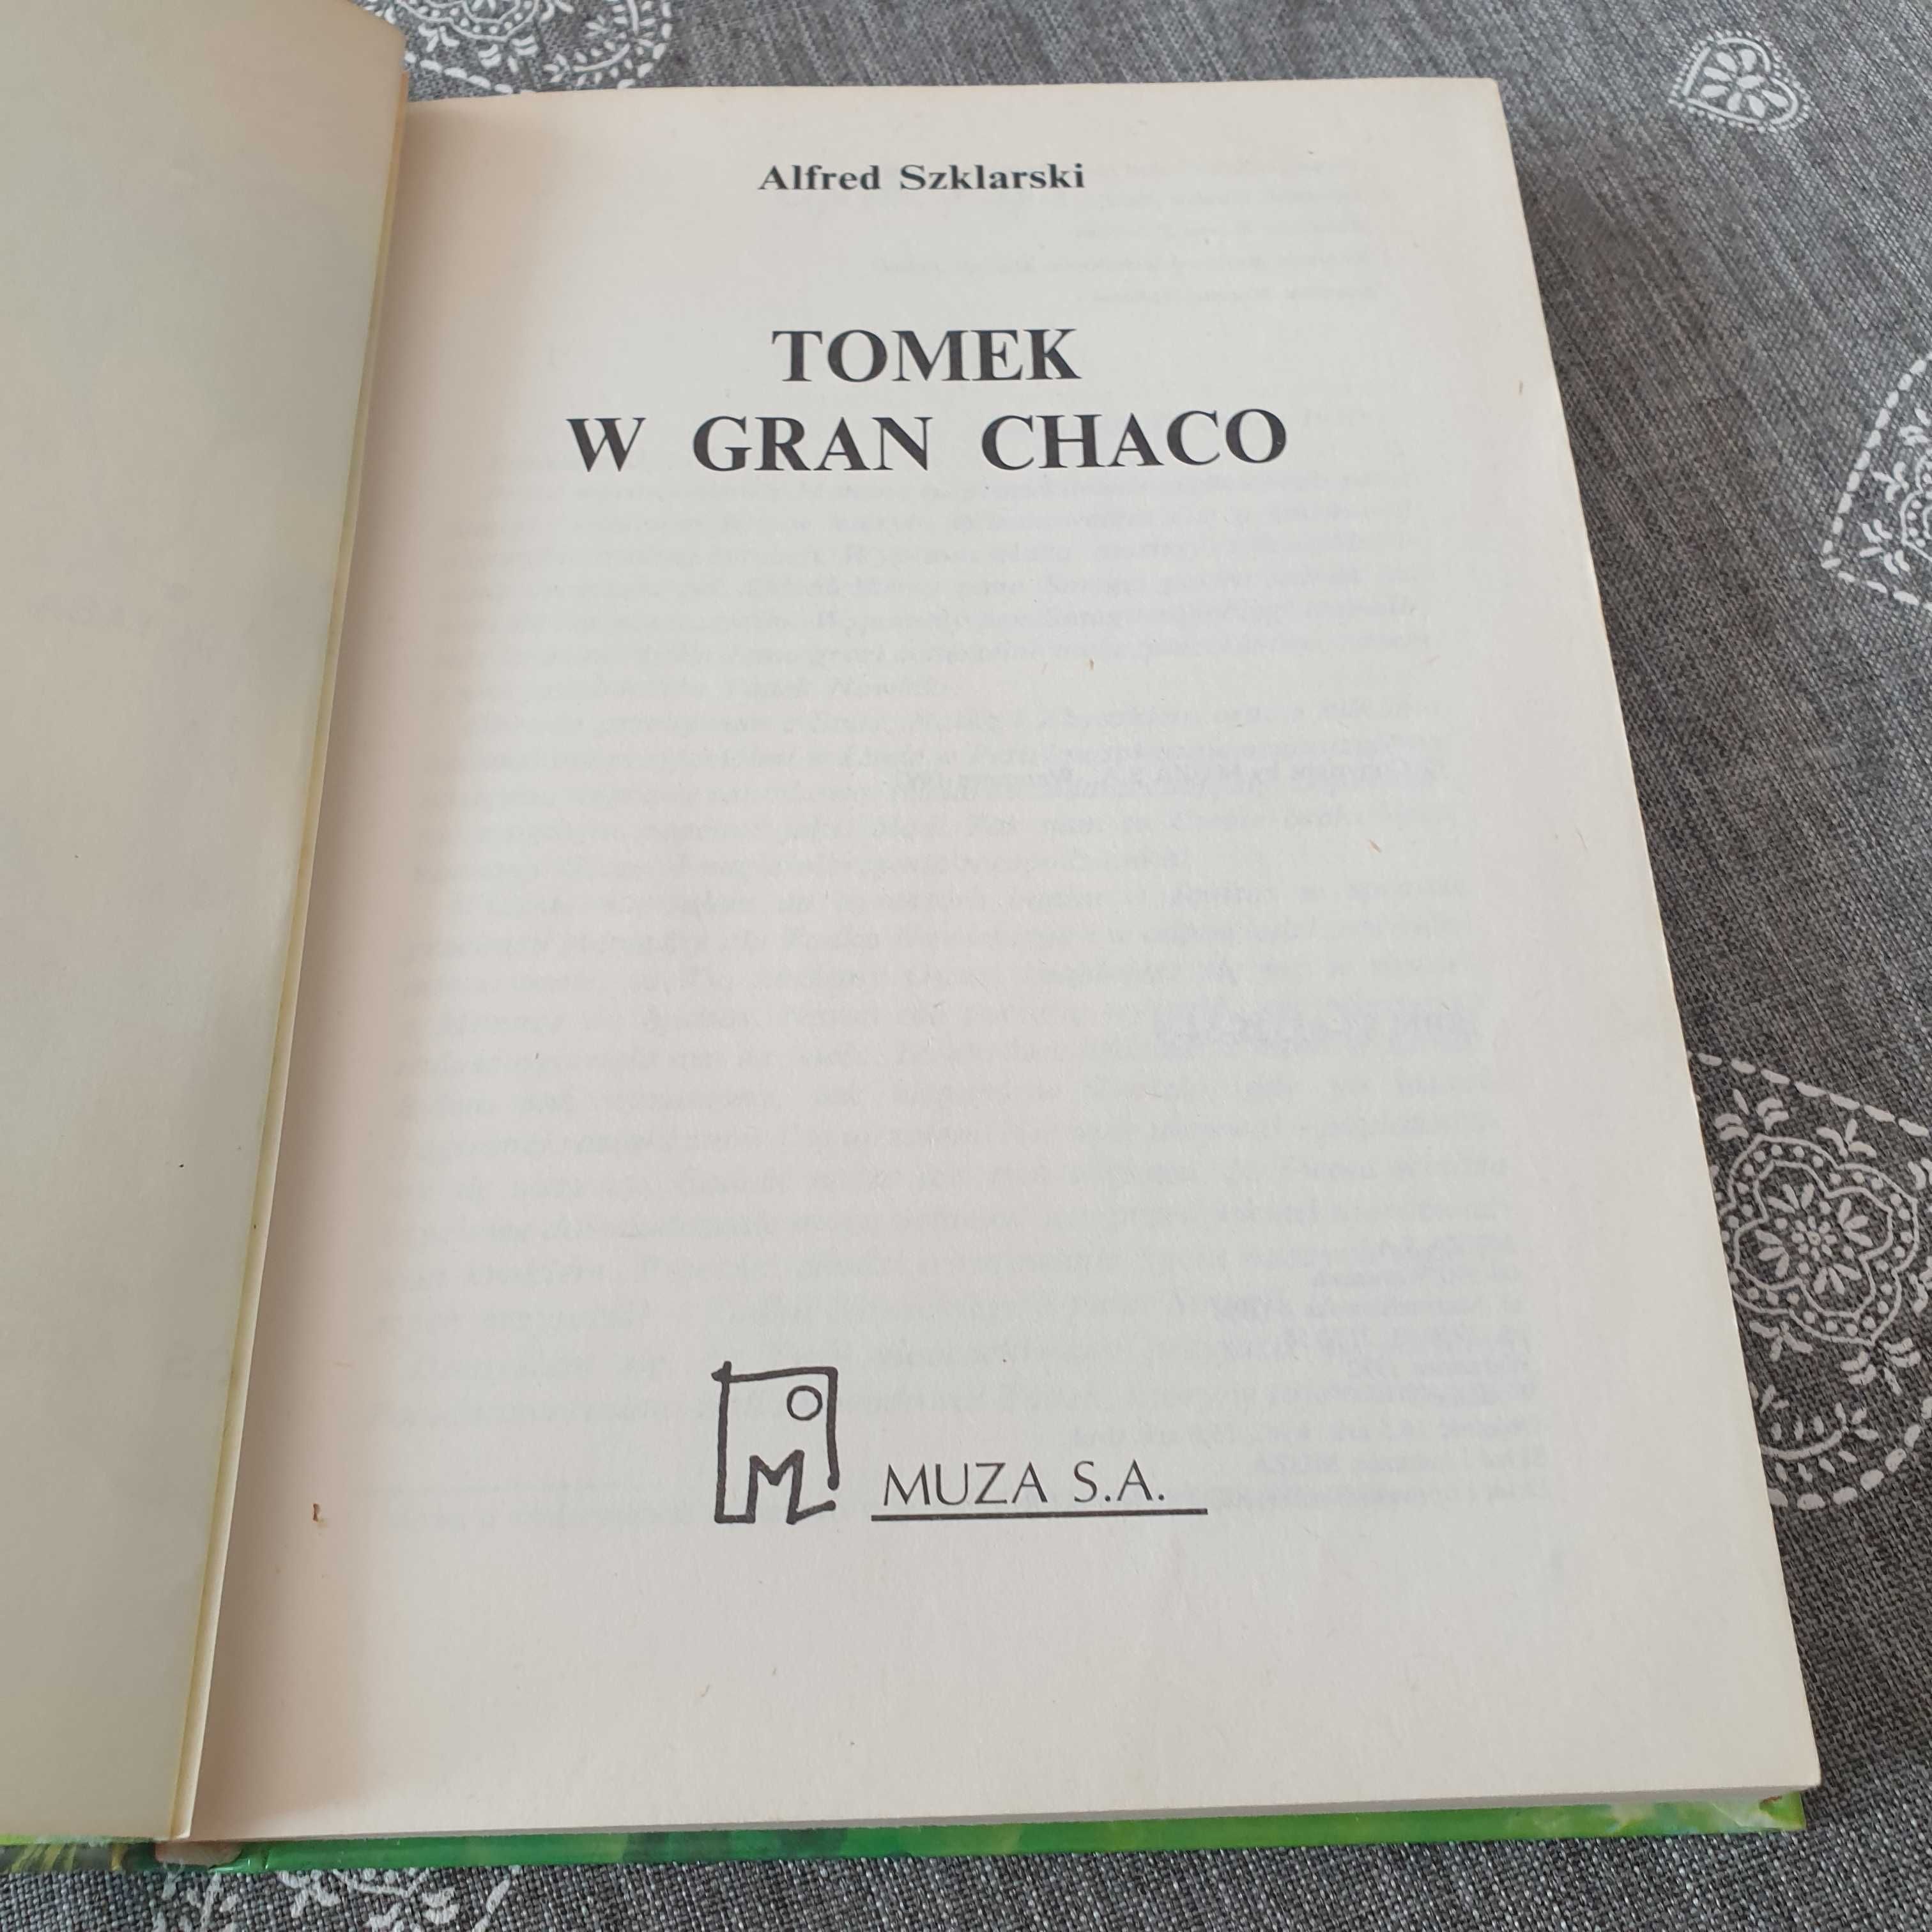 Książka - "Tomek w Gran Chaco" - Alfred Szklarski